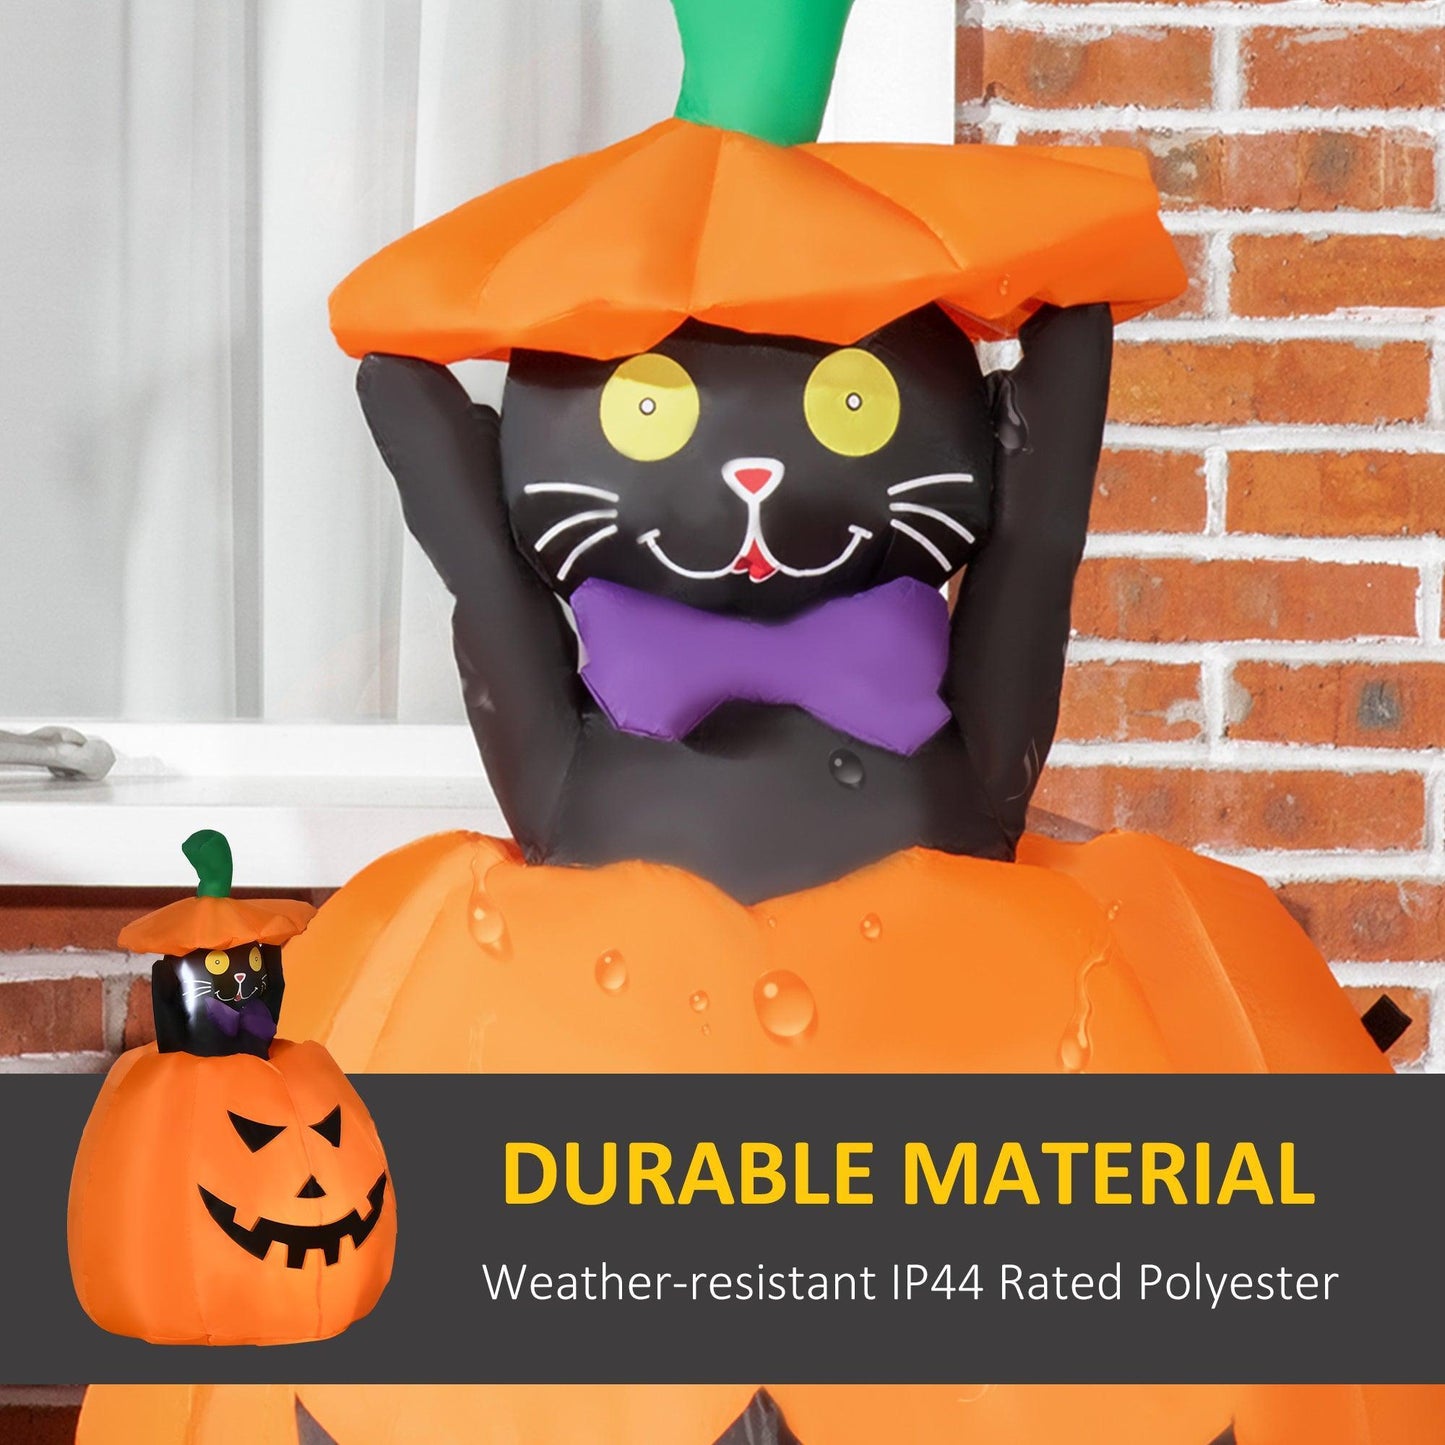 Outsunny 4ft Halloween Pumpkin w/ Lifting Cat - ALL4U RETAILER LTD